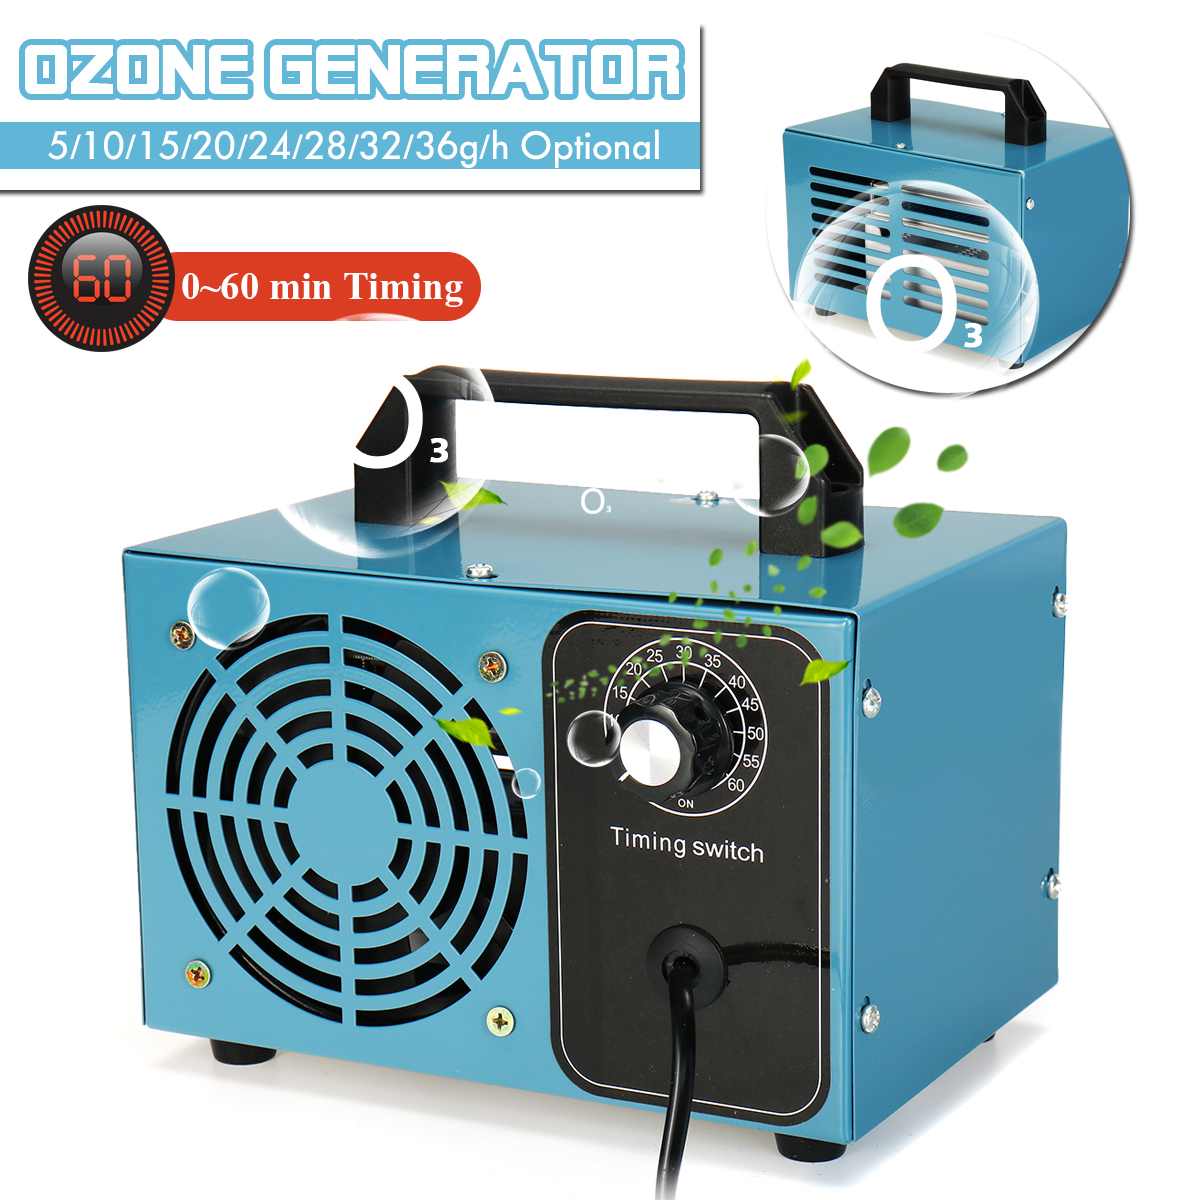 AC 220V 24g/h Ozone Generator Air Cleaner Purifier Ozonizer Ozonizador Ozonator